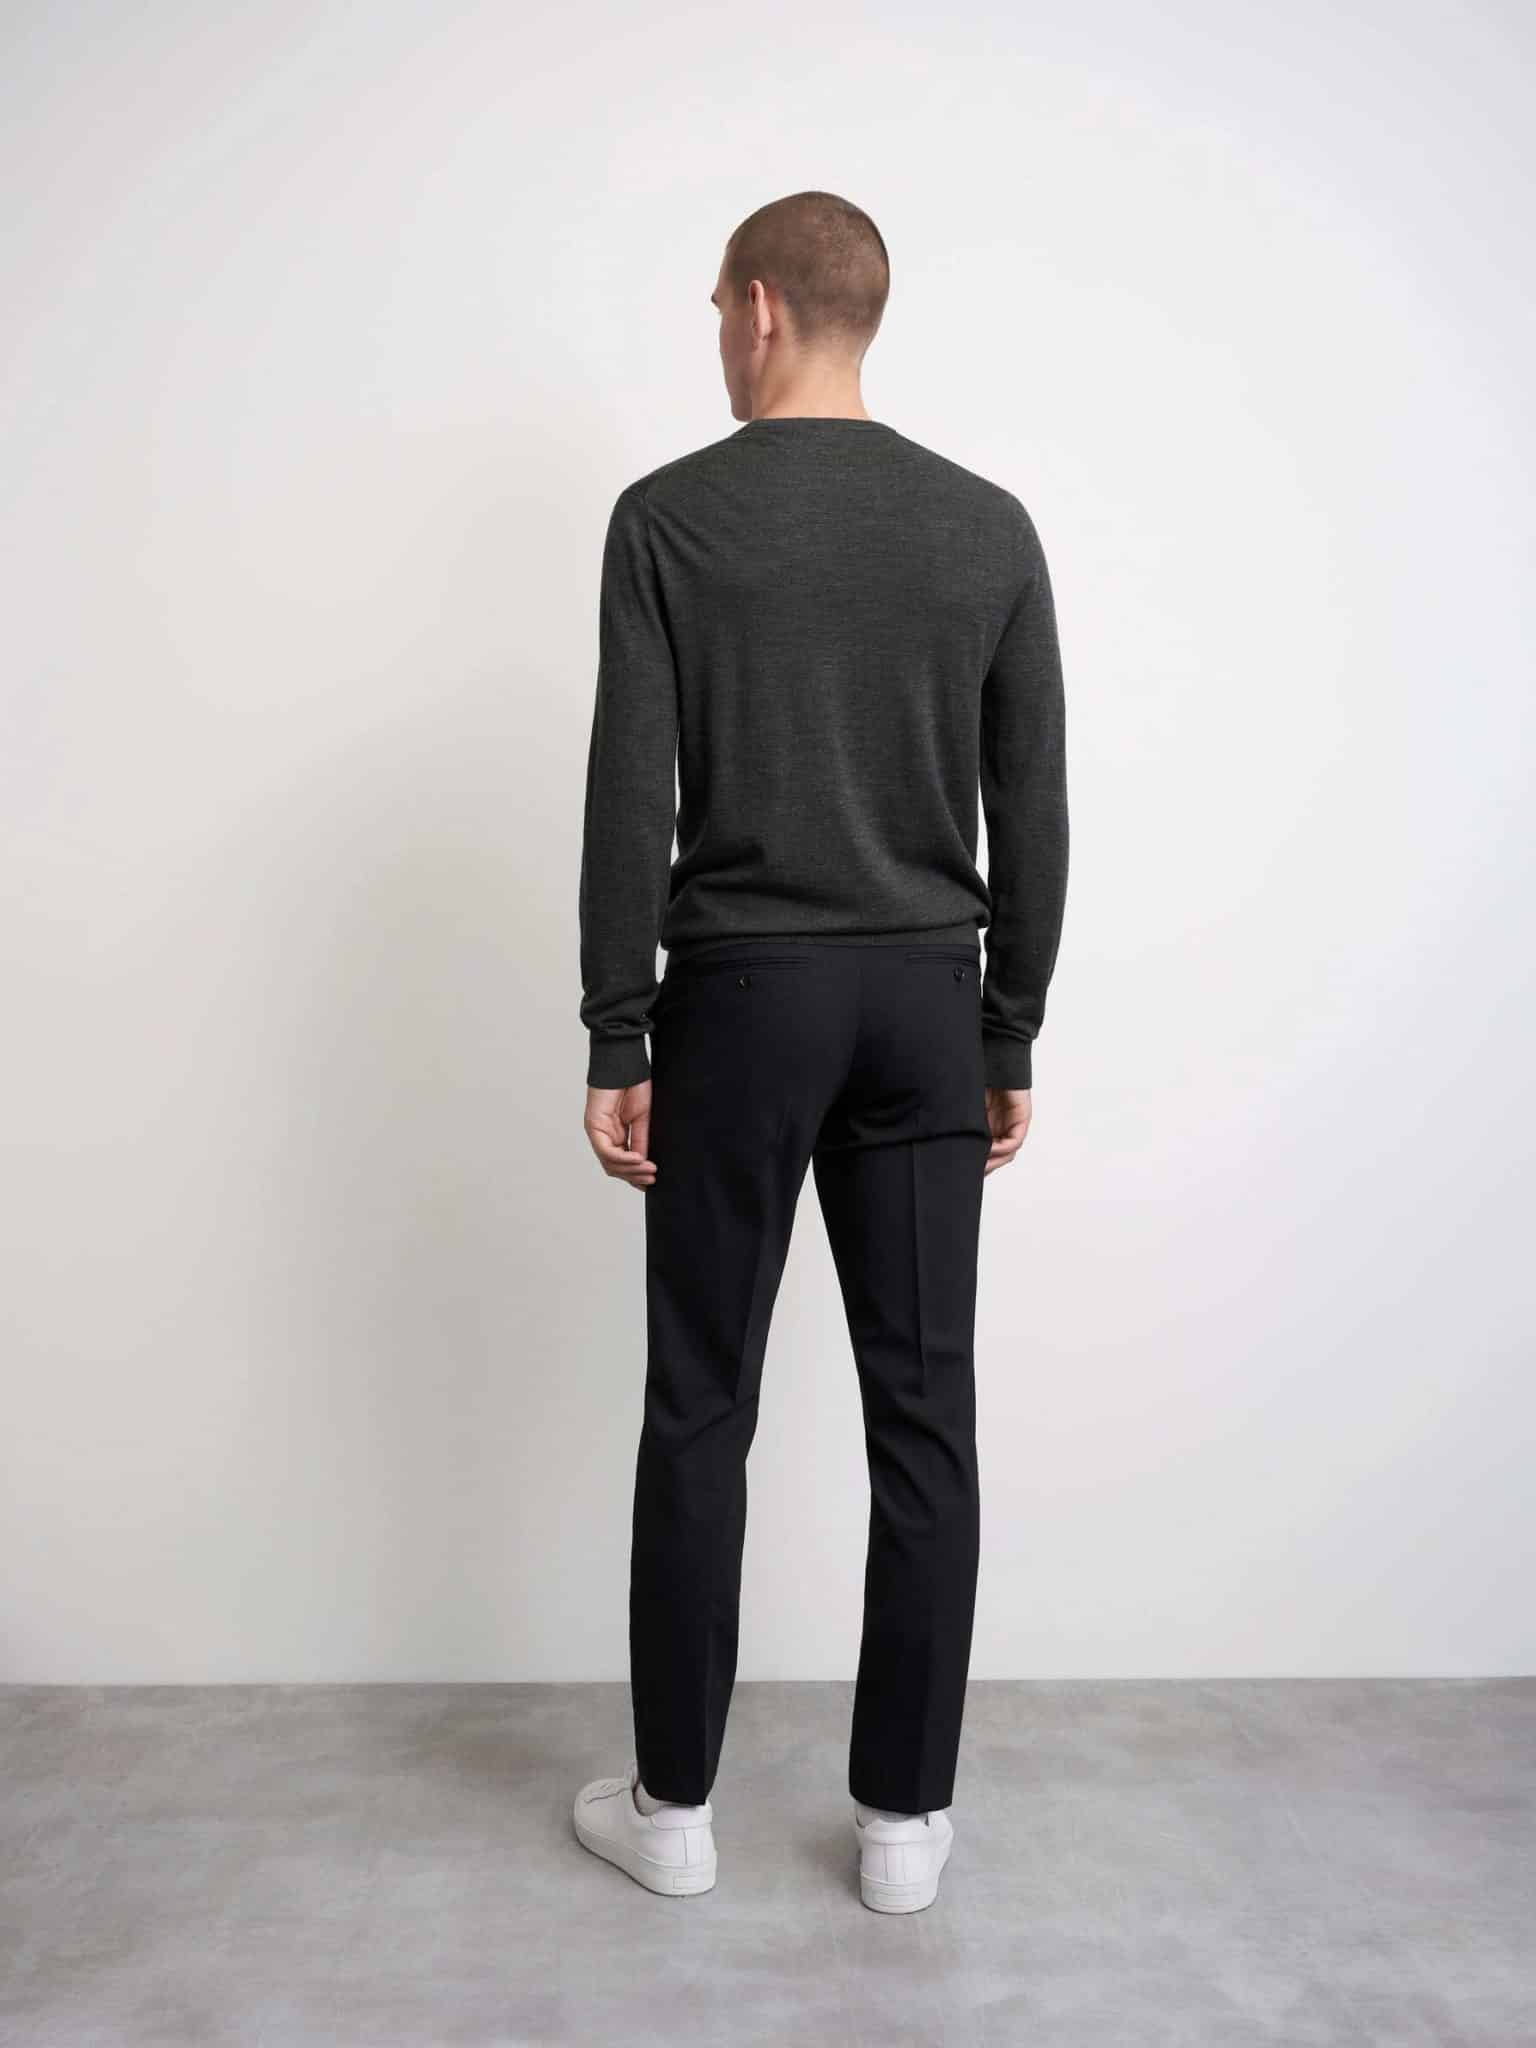 Buy Tiger of Sweden Tordon Trousers Dark Grey - Scandinavian Fashion Store